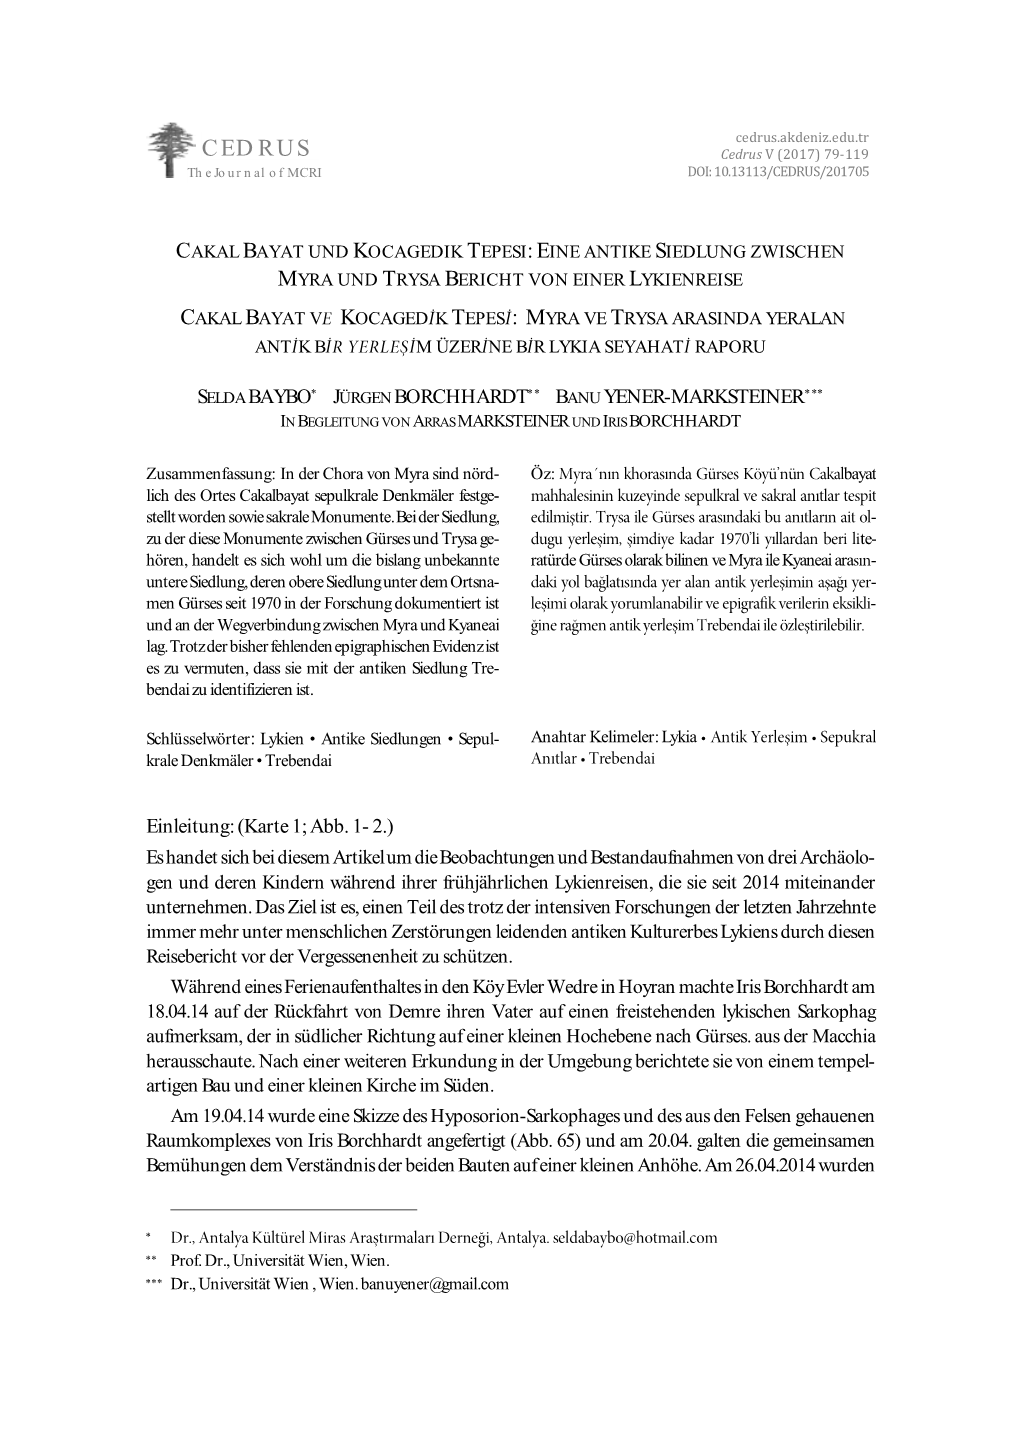 Cedrus.Akdeniz.Edu.Tr CEDRUS Cedrus 7 79-119 the Journal of MCRI 705 V (201 ) DOI: 10.13113/CEDRUS/201